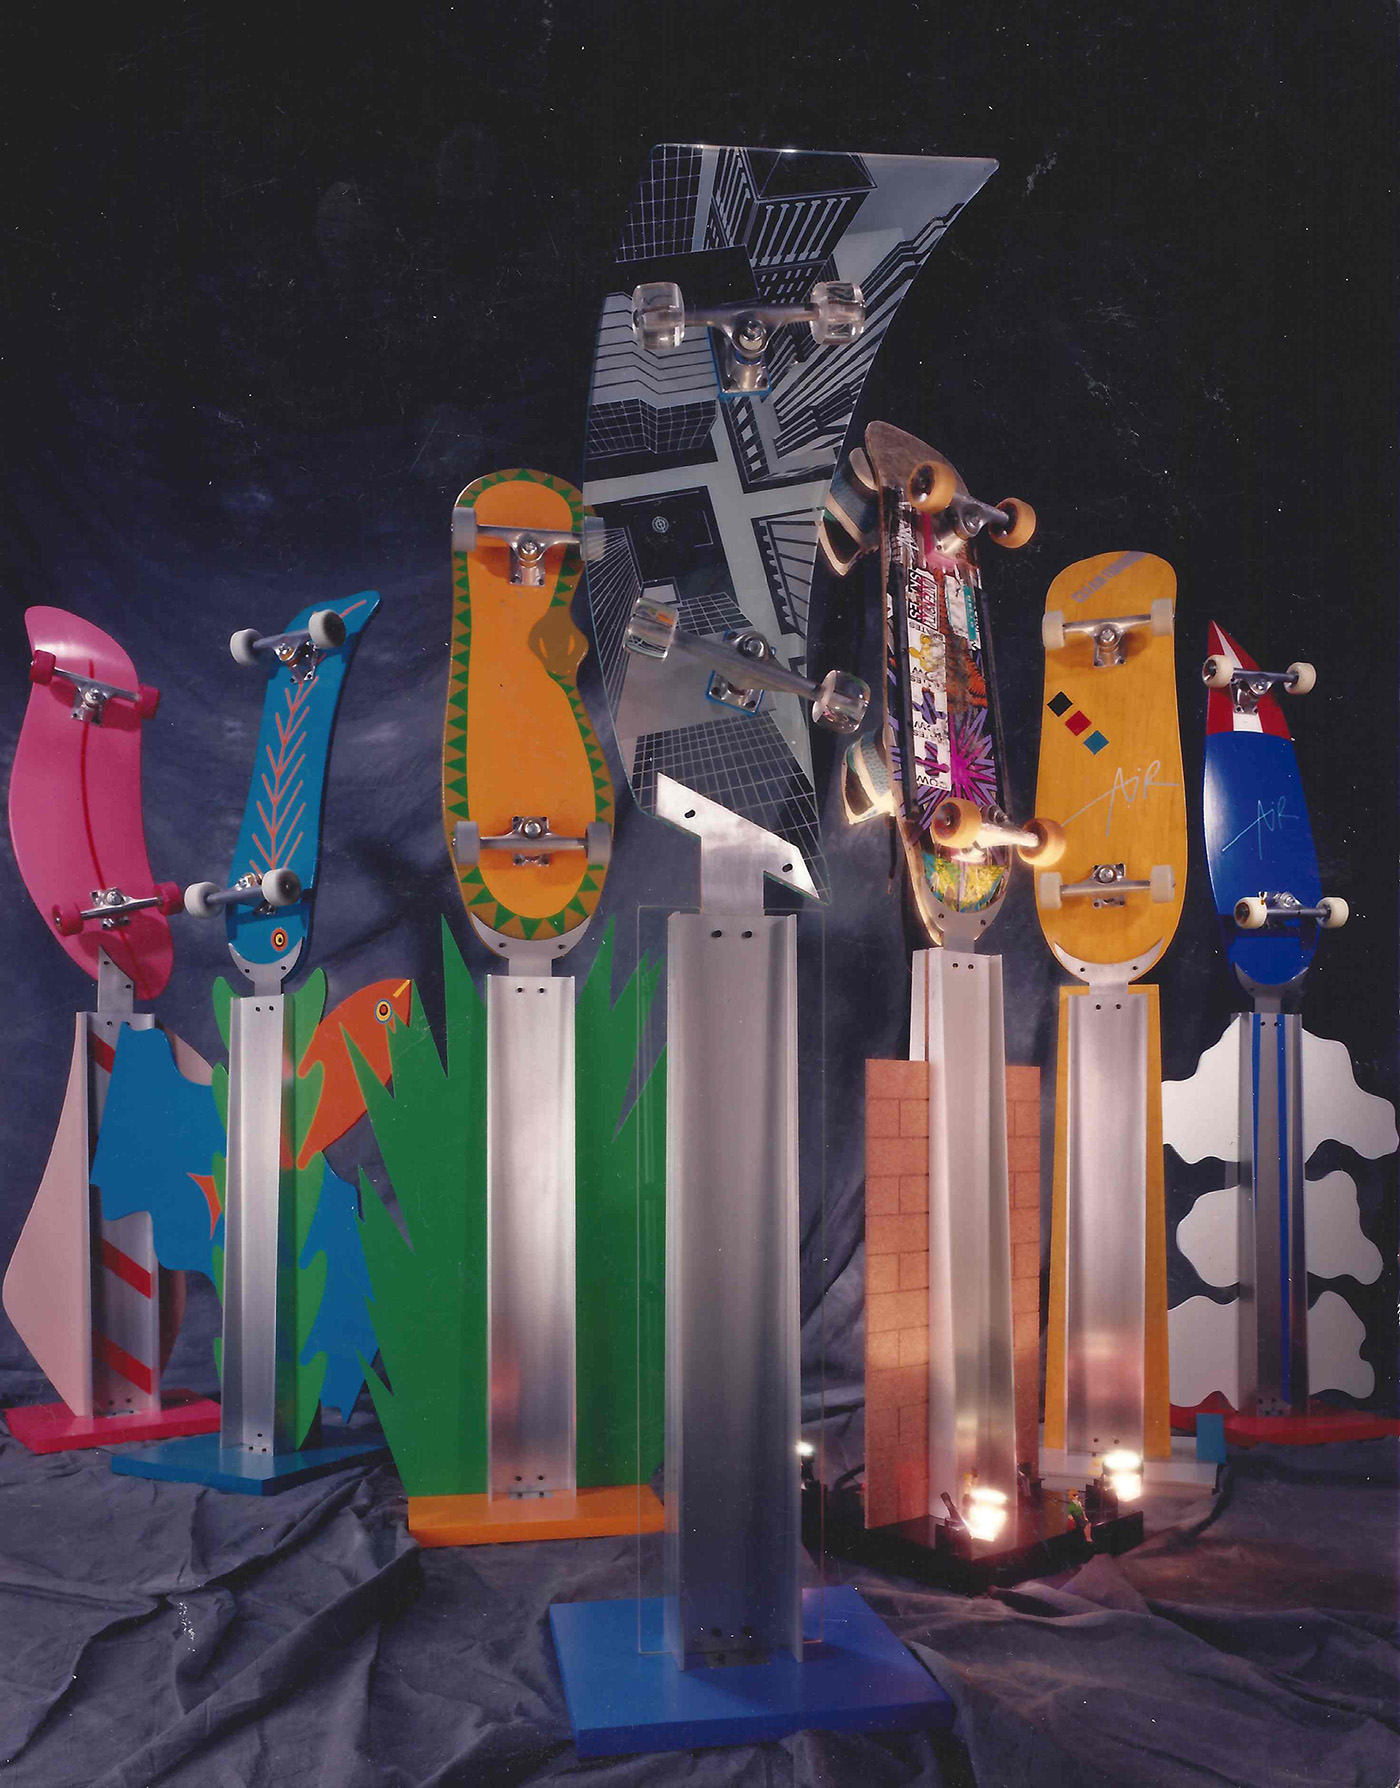 William Eric : Skateboard clothes trees, 1998.